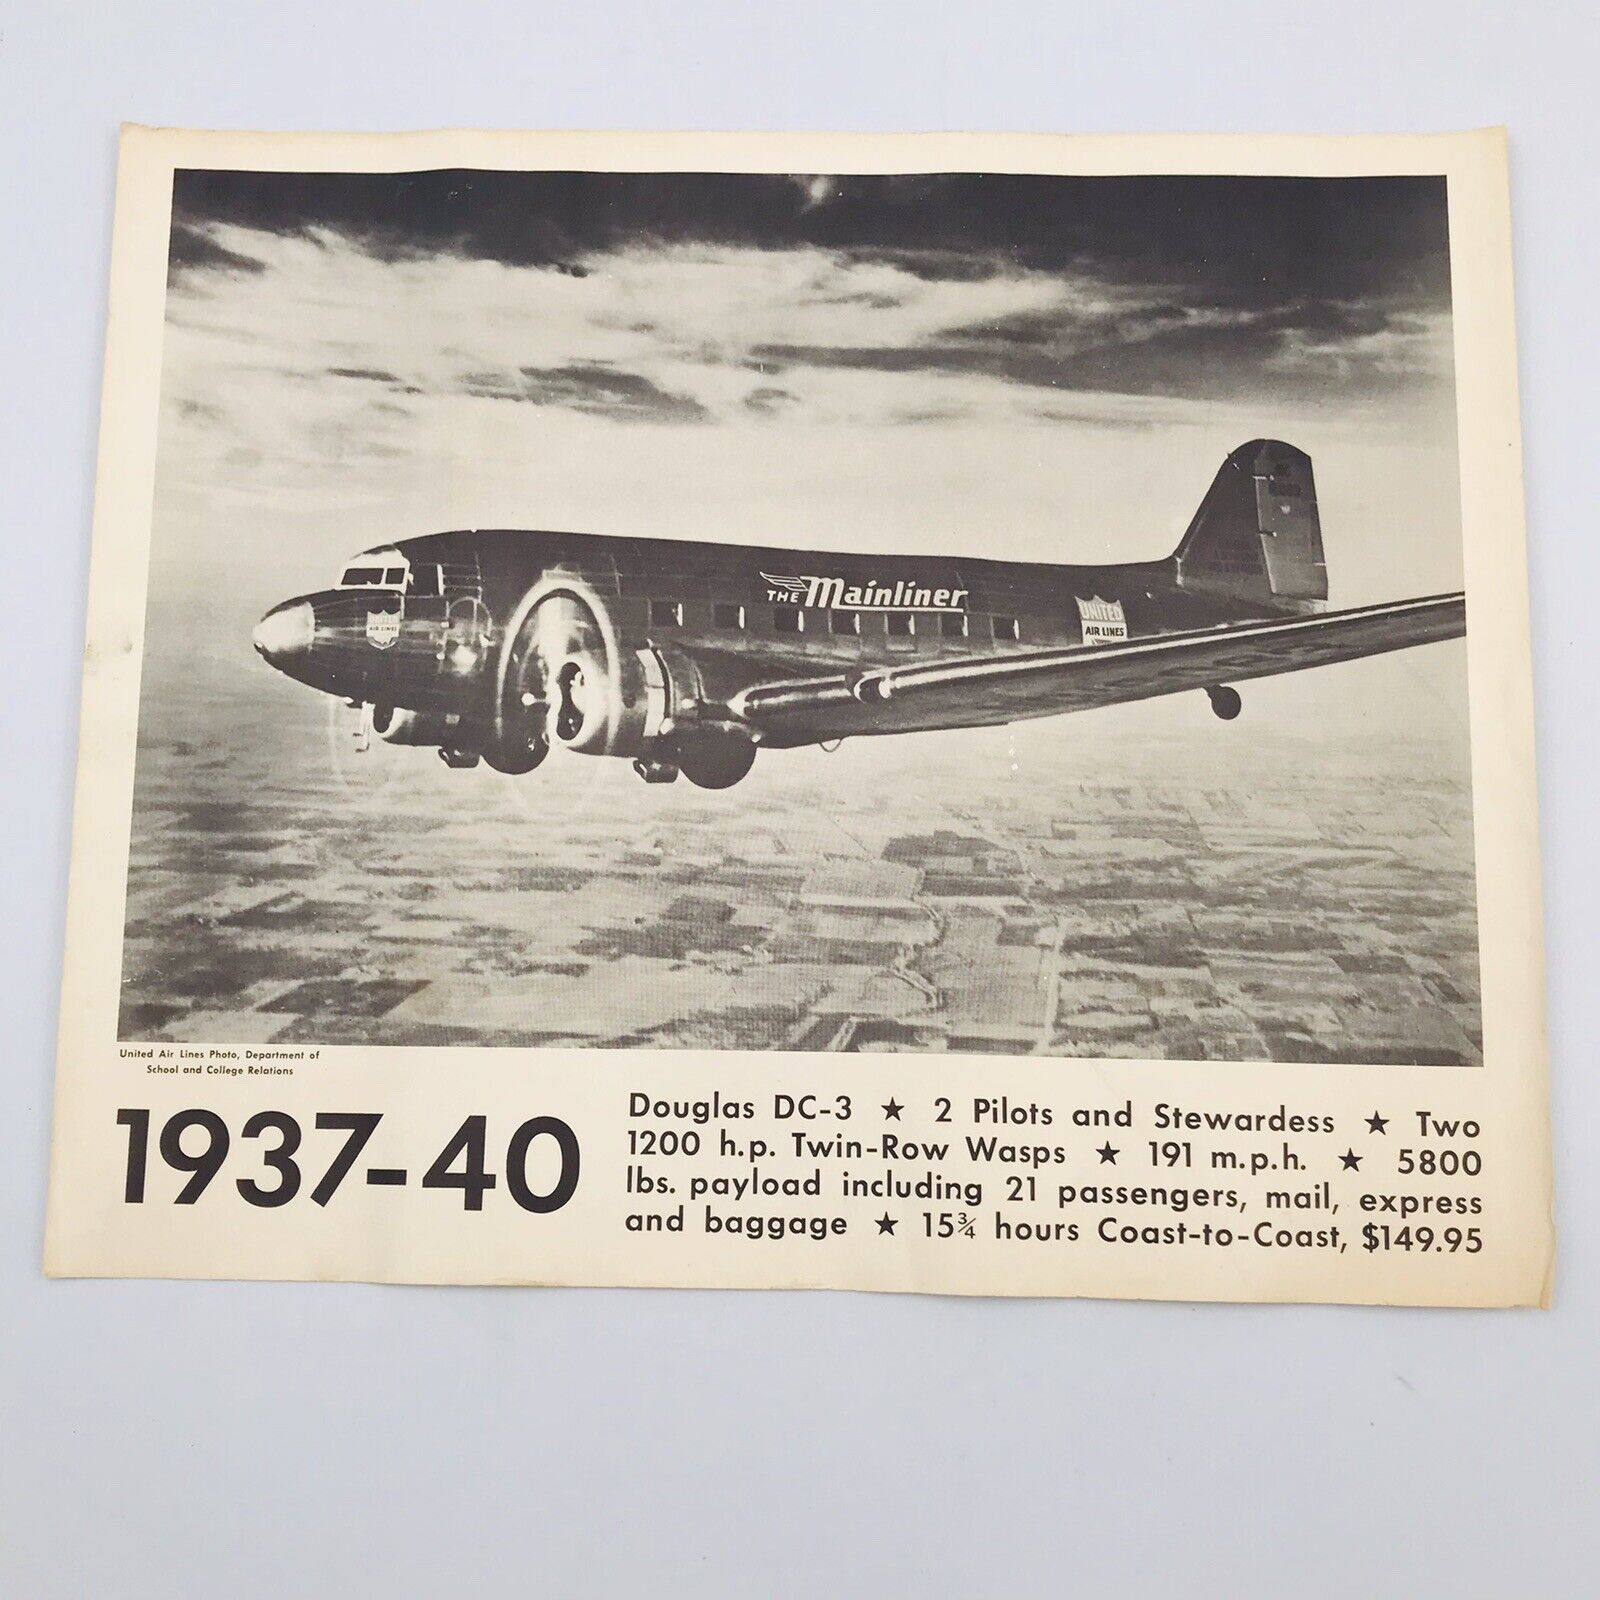 Vintage United Air Lines Photo Print 1937-40 Douglas DC-3 Mainliner Airplane 